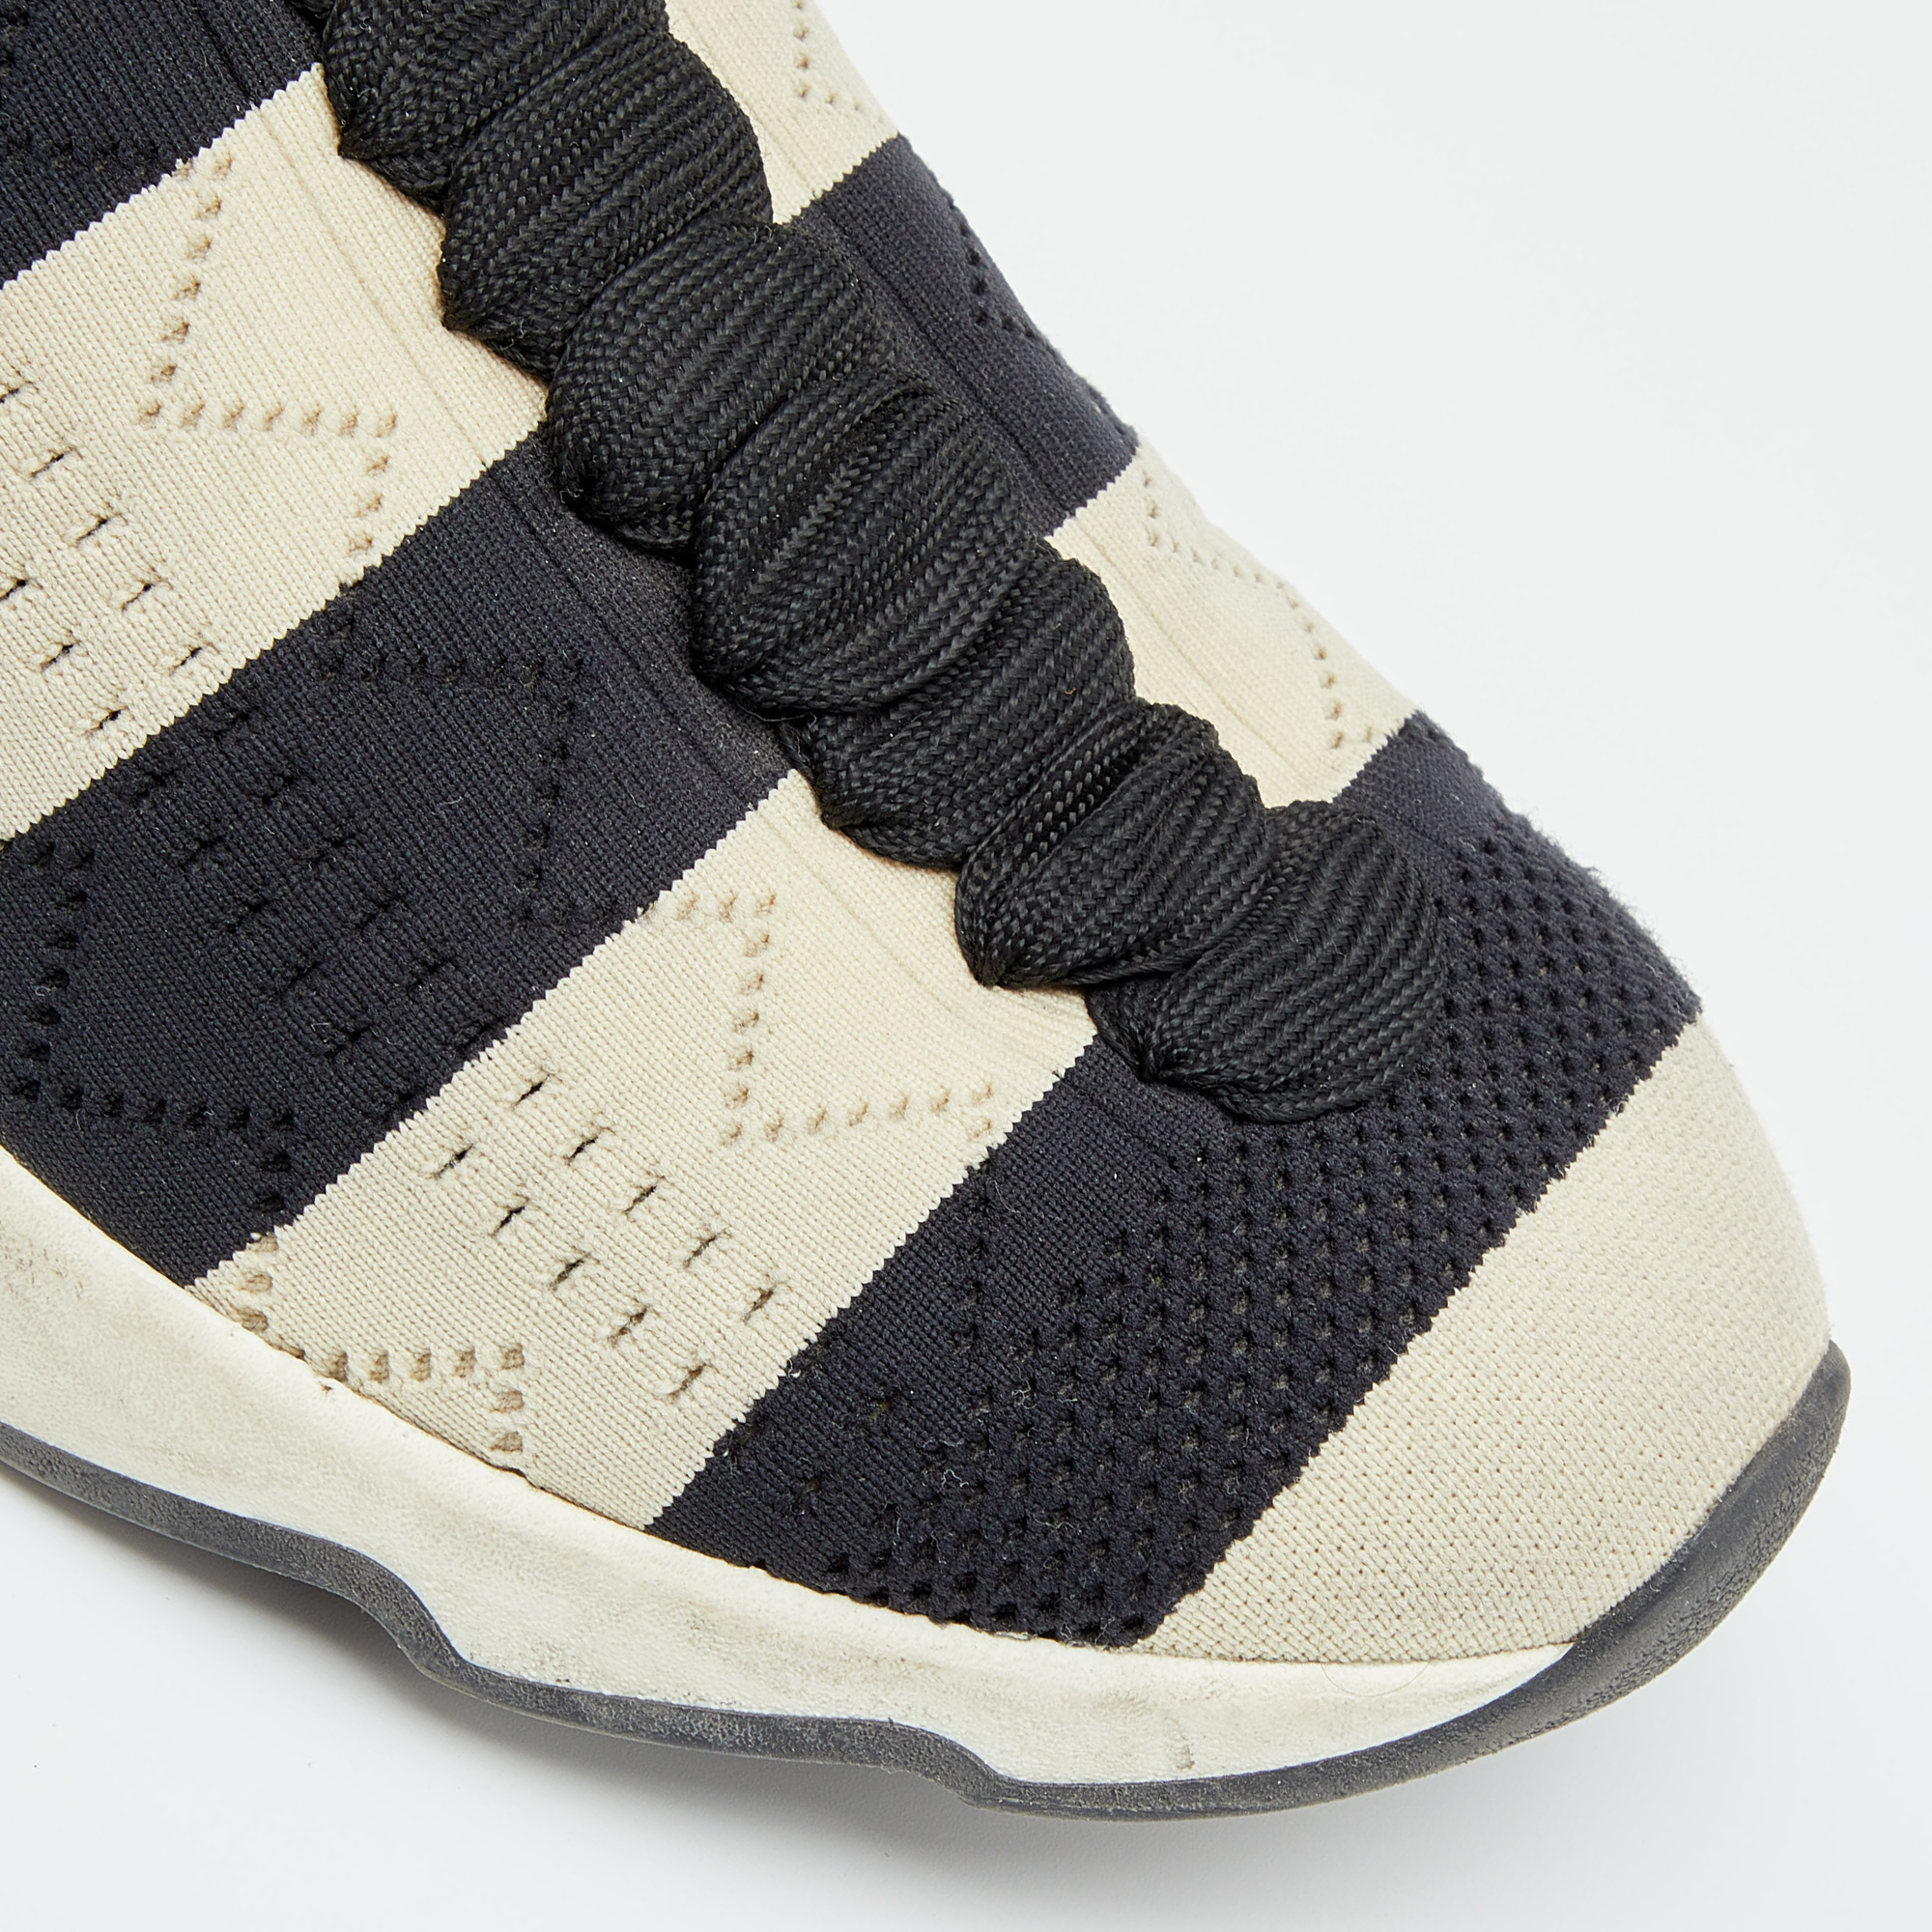 Fendi Black/Off-White Striped Fabric Slip On Sneakers 38.5